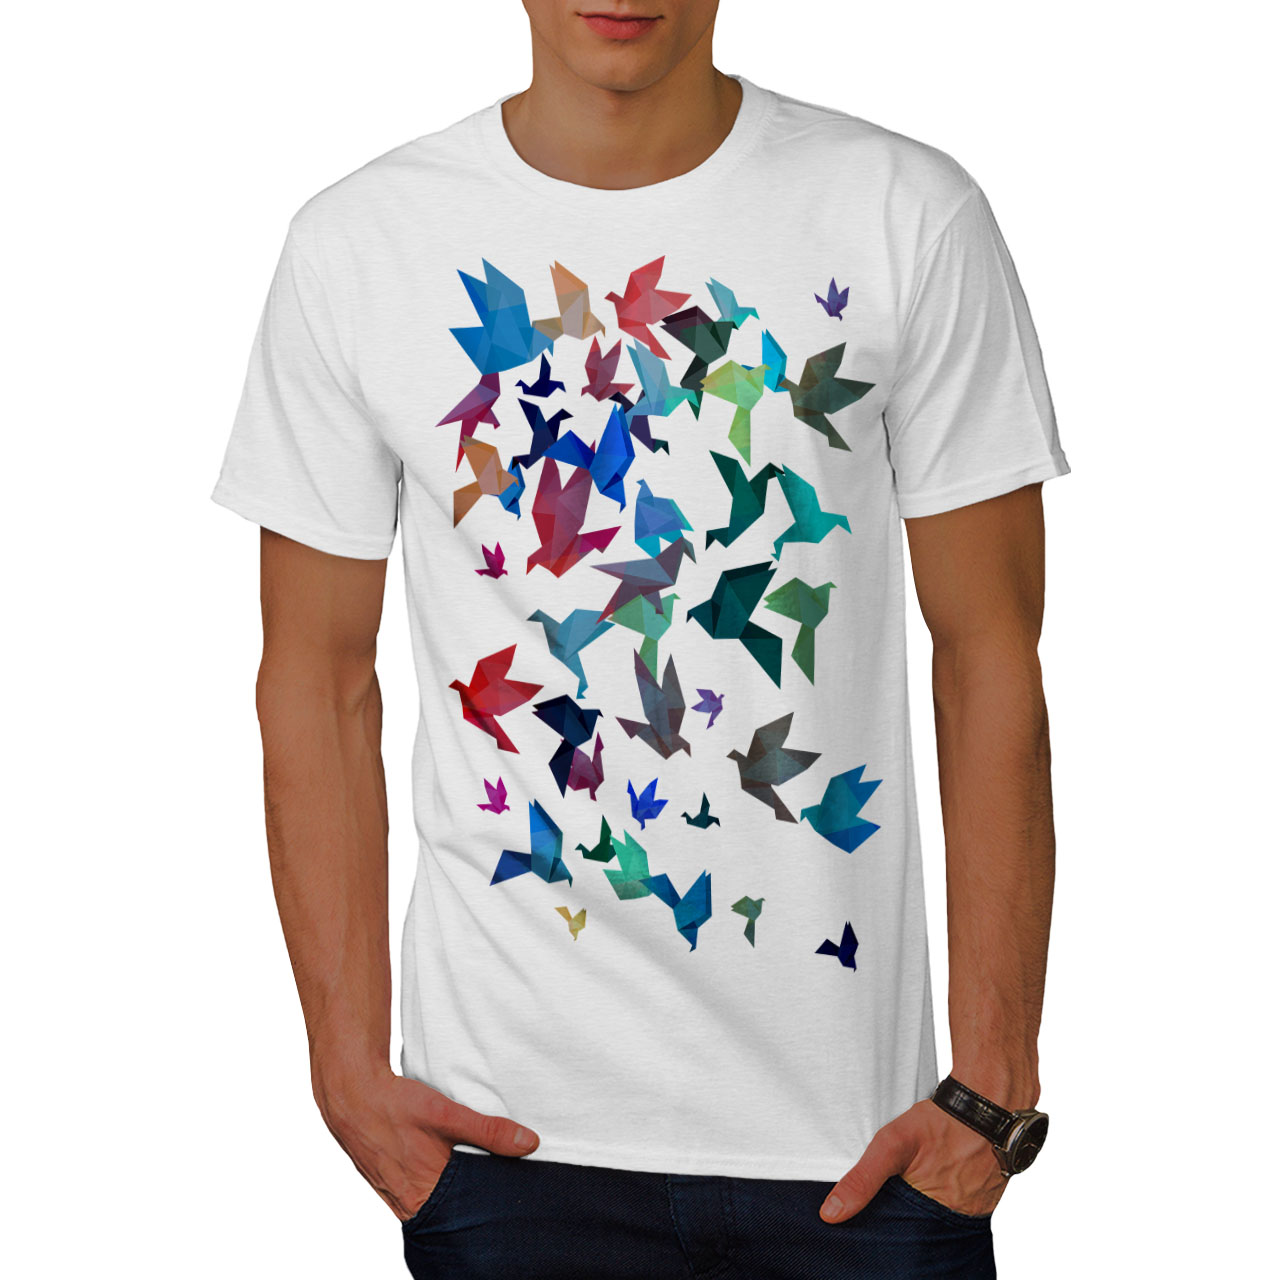 Wellcoda Origami Bird Colors Mens T Shirt Craft Graphic Design Printed Tee Ebay 